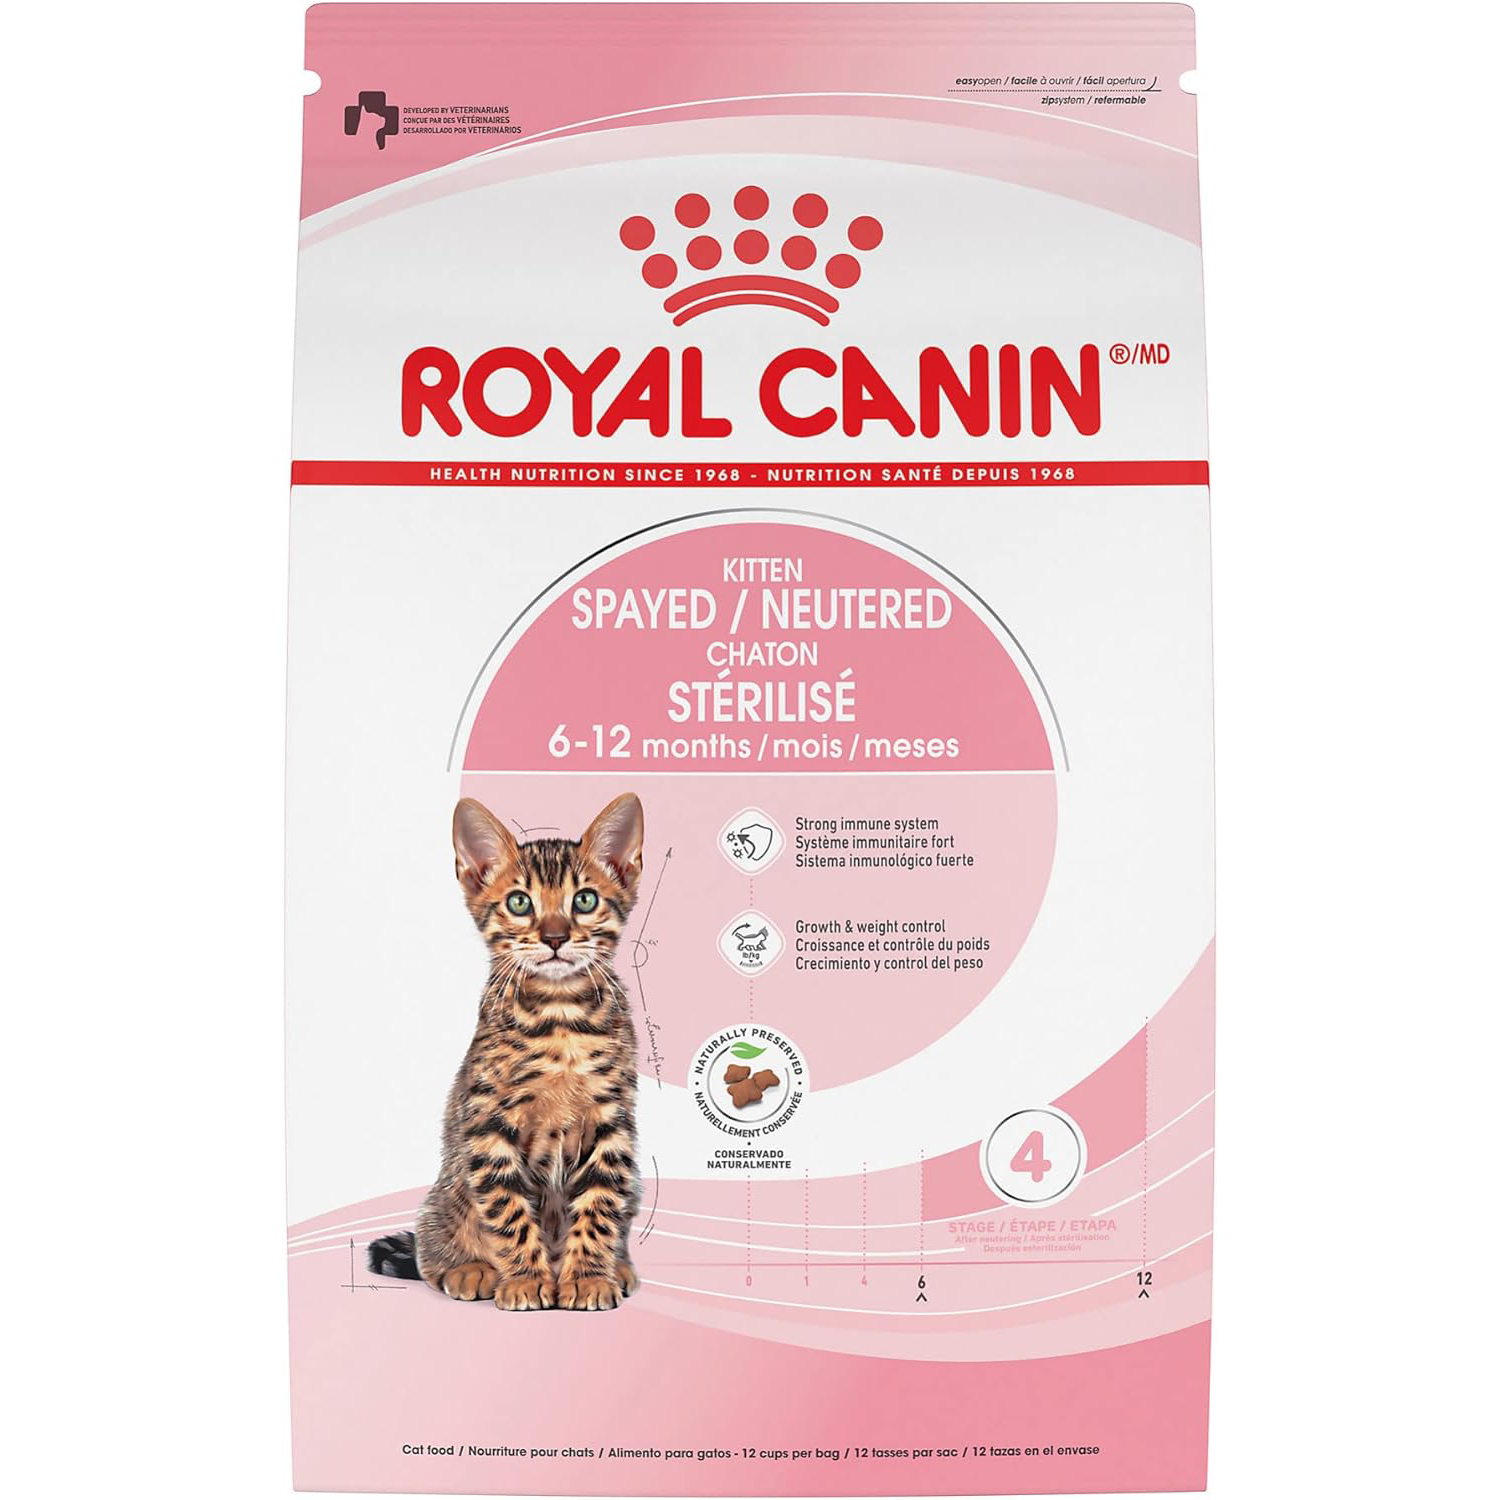 ROYAL CANIN Feline Health Nutrition Kitten Spayed_Neutered Dry cat Food